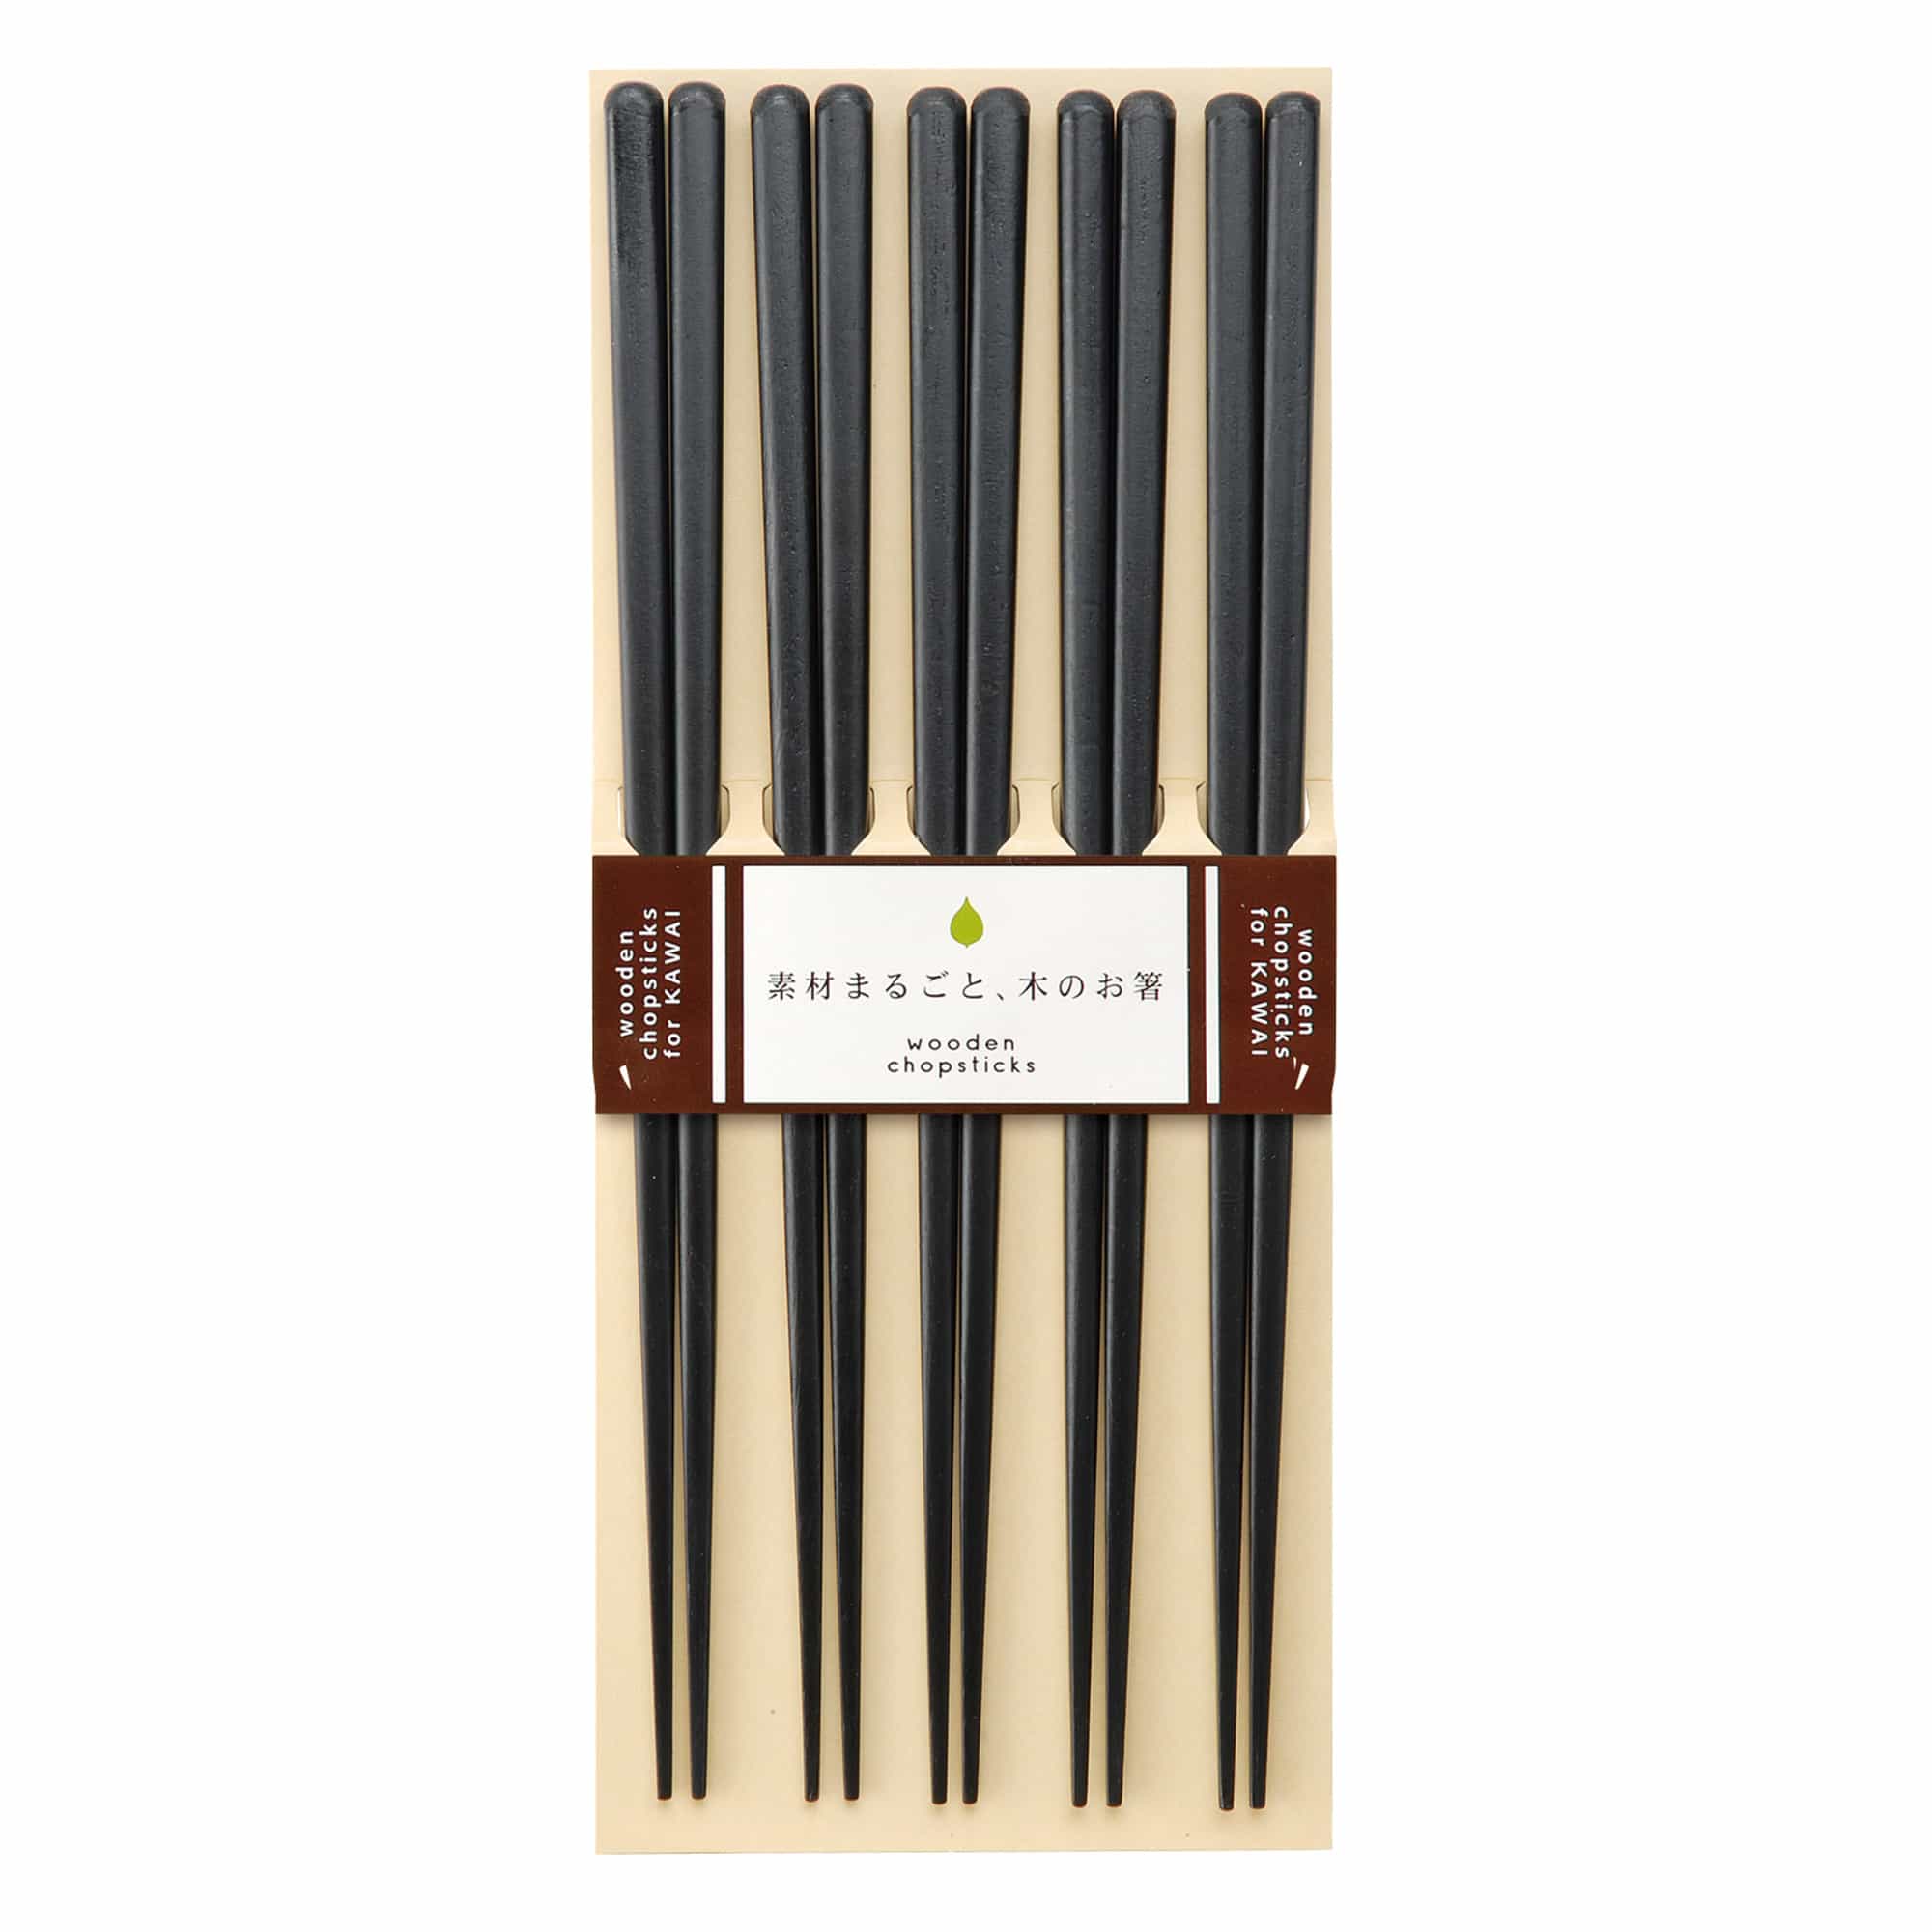 Kawai Plain Wood Chopsticks Black - Set of 5